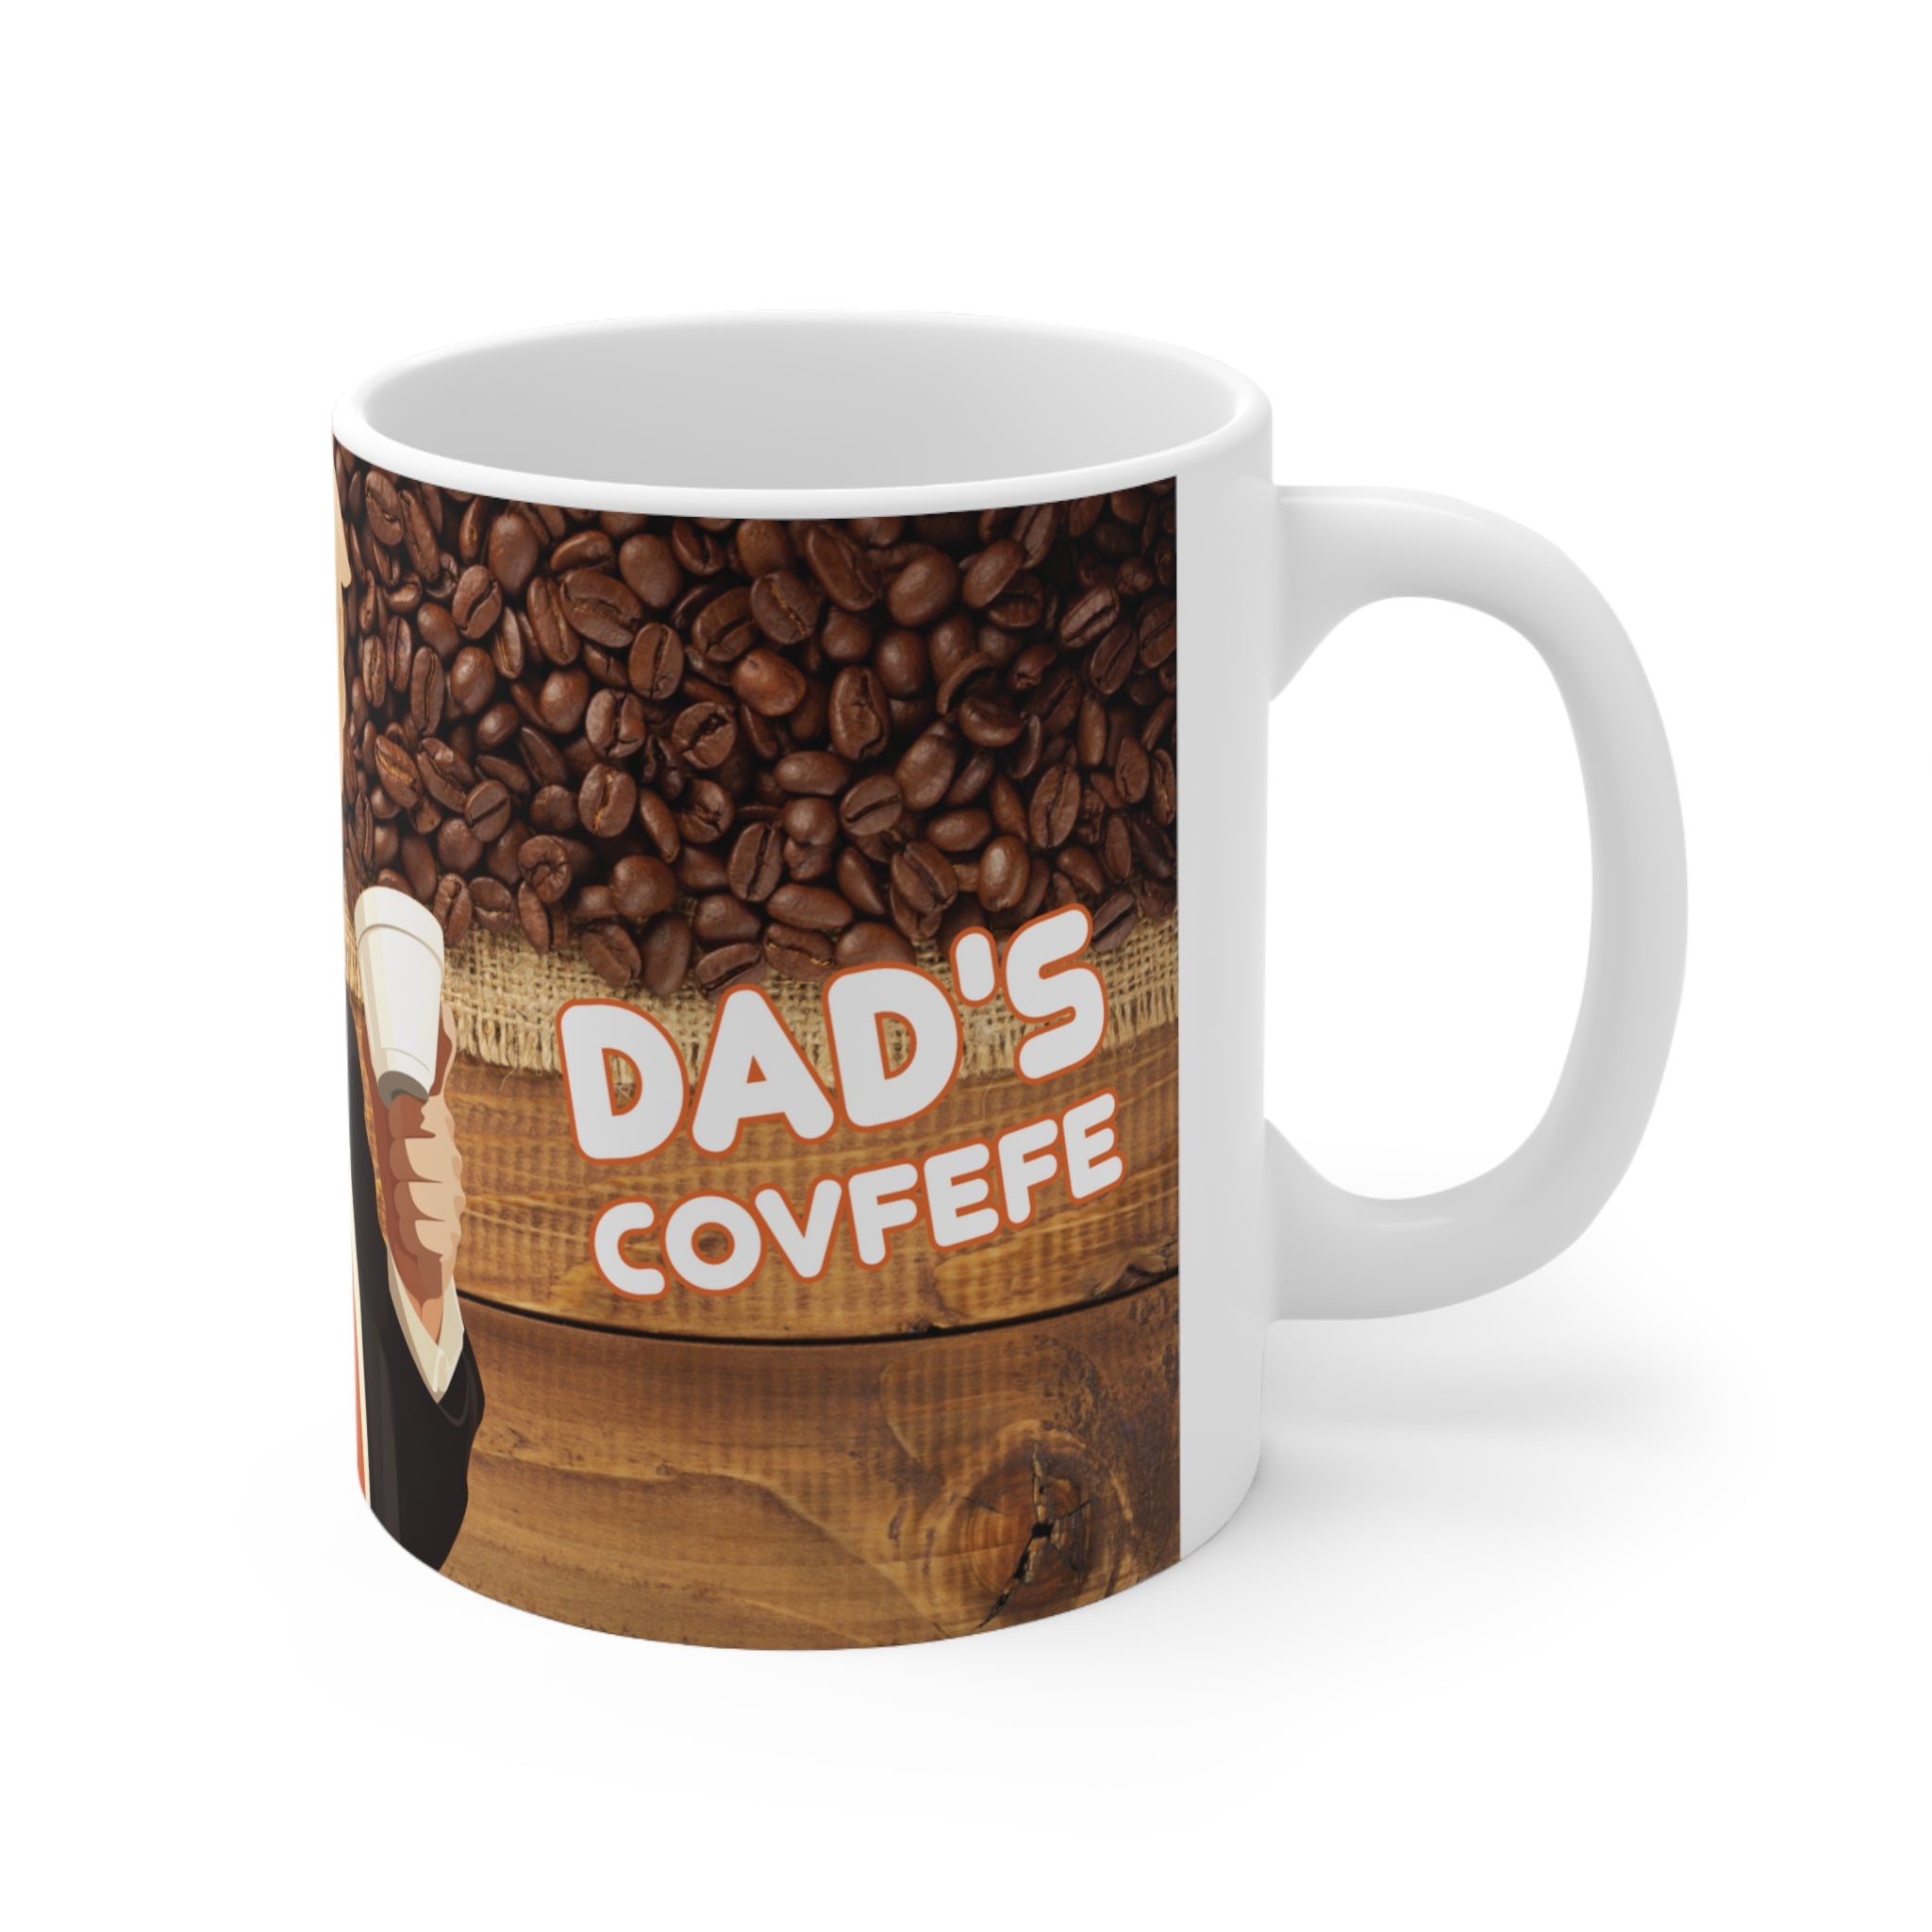 Donald Trump "Dad's Covfefe" Coffee Mug